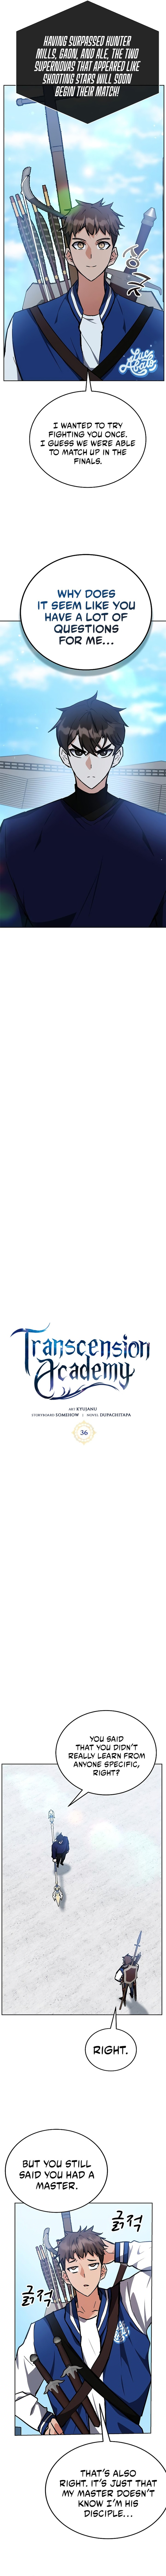 transcension_academy_36_2